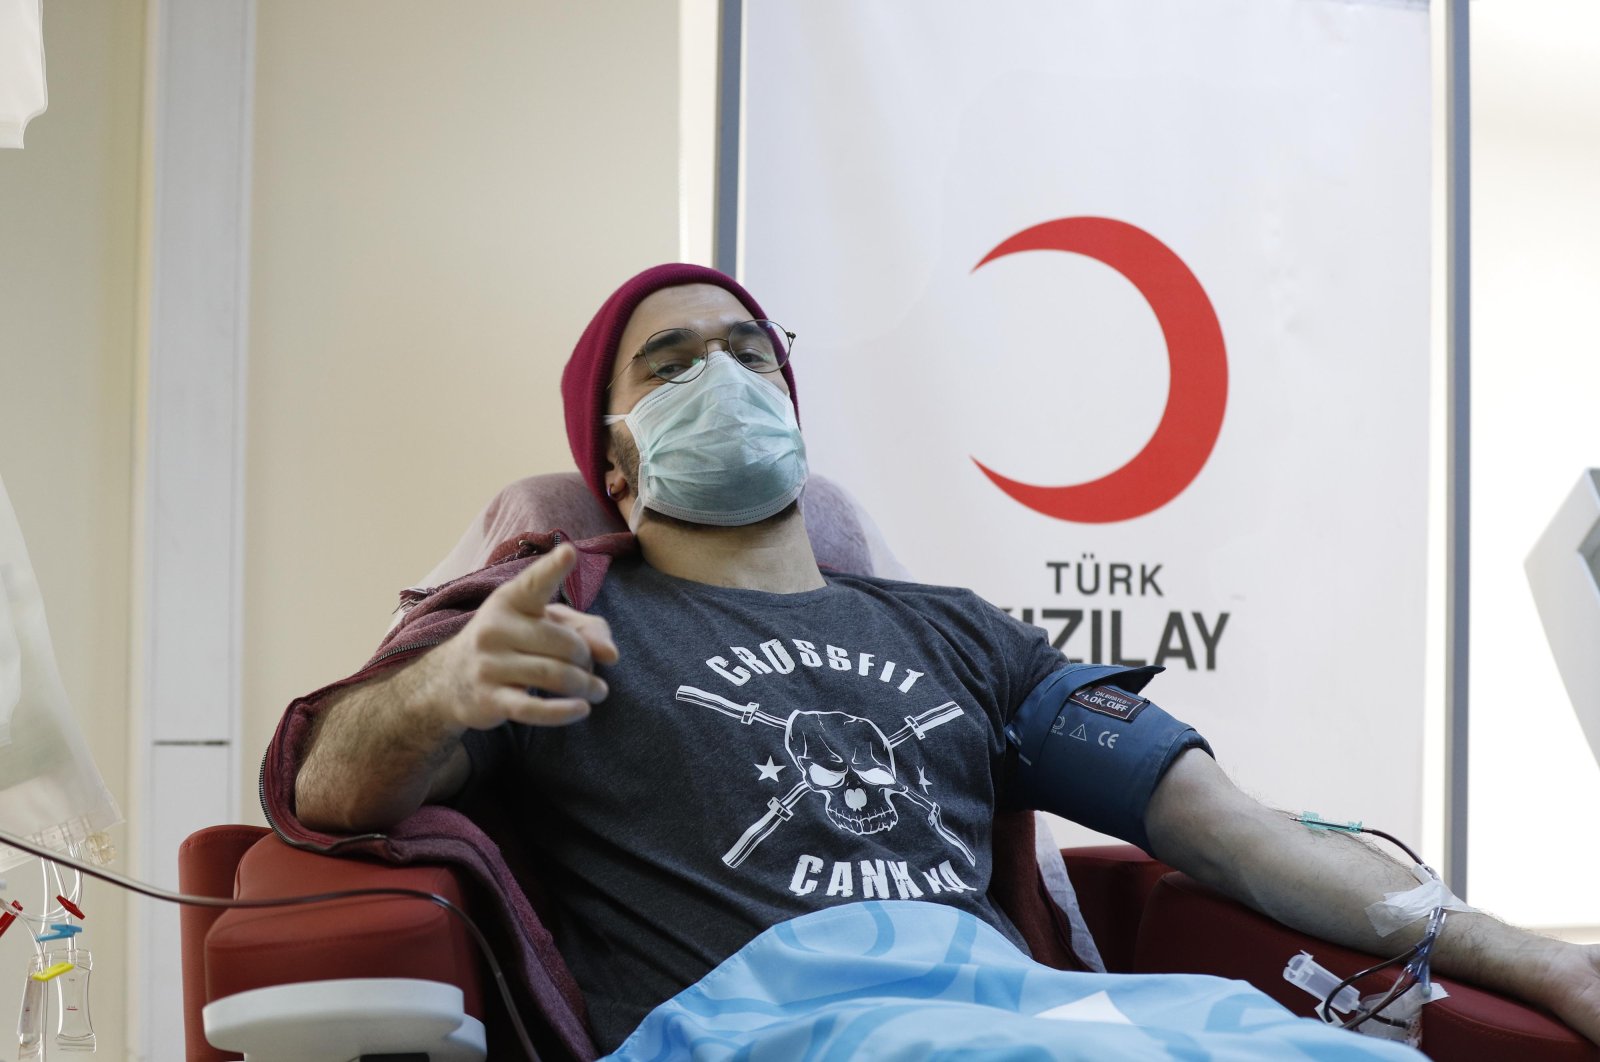 Hasan Balıkçı donates plasma for a complementary coronavirus treatment in Ankara, Turkey, April 22, 2020. (DHA Photo) 